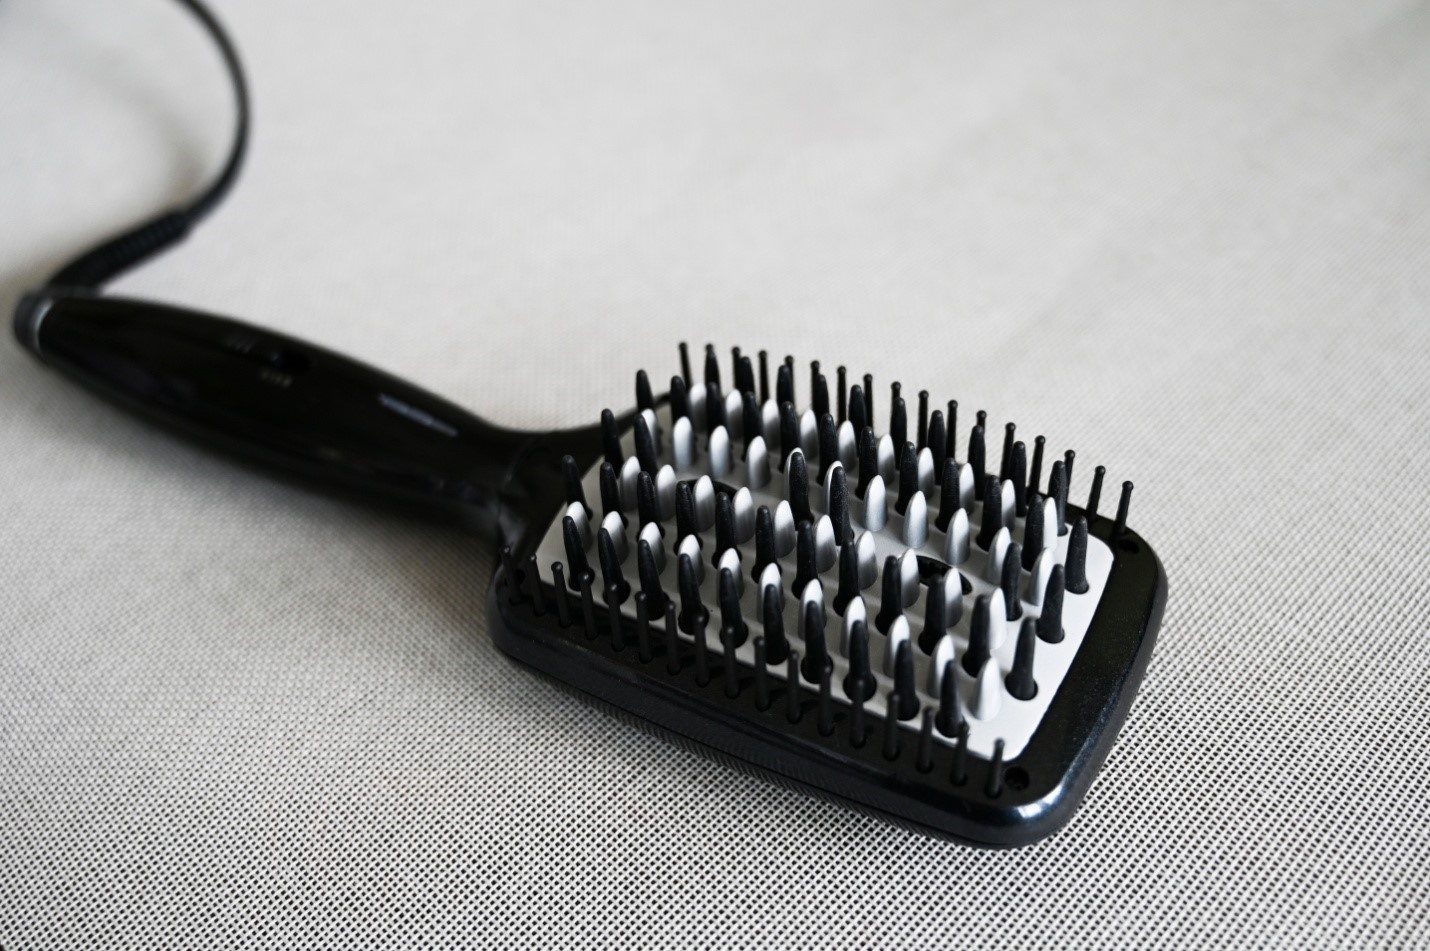 Hair Straightening Brush for Busy-Girls-On-the-Go 11